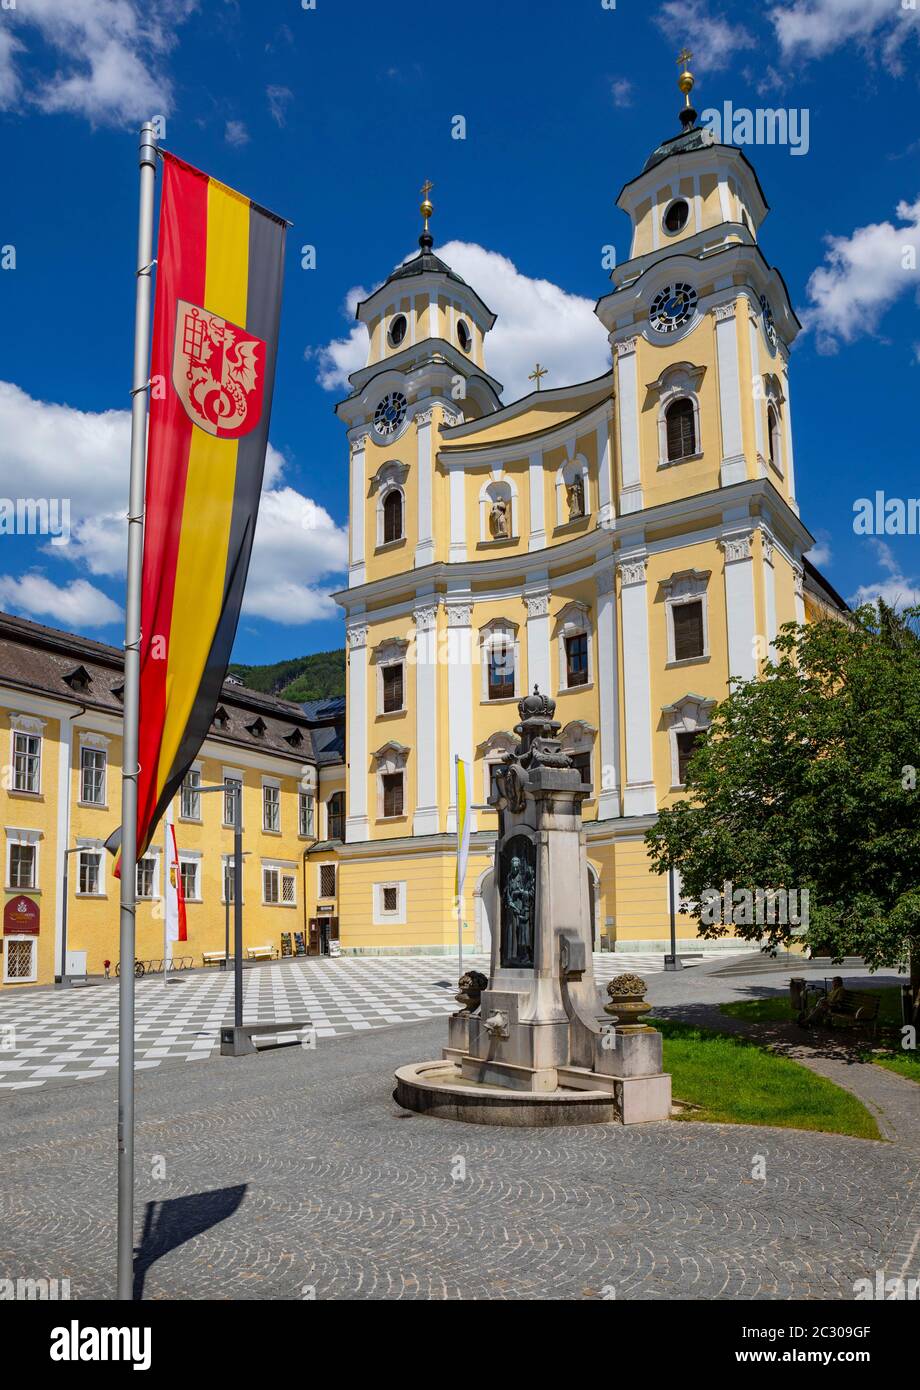 Basilica of St. Michael and fountain Princess Ignazia von Wrede, market place, Mondsee, Salzkammergut, Upper Austria, Austria Stock Photo